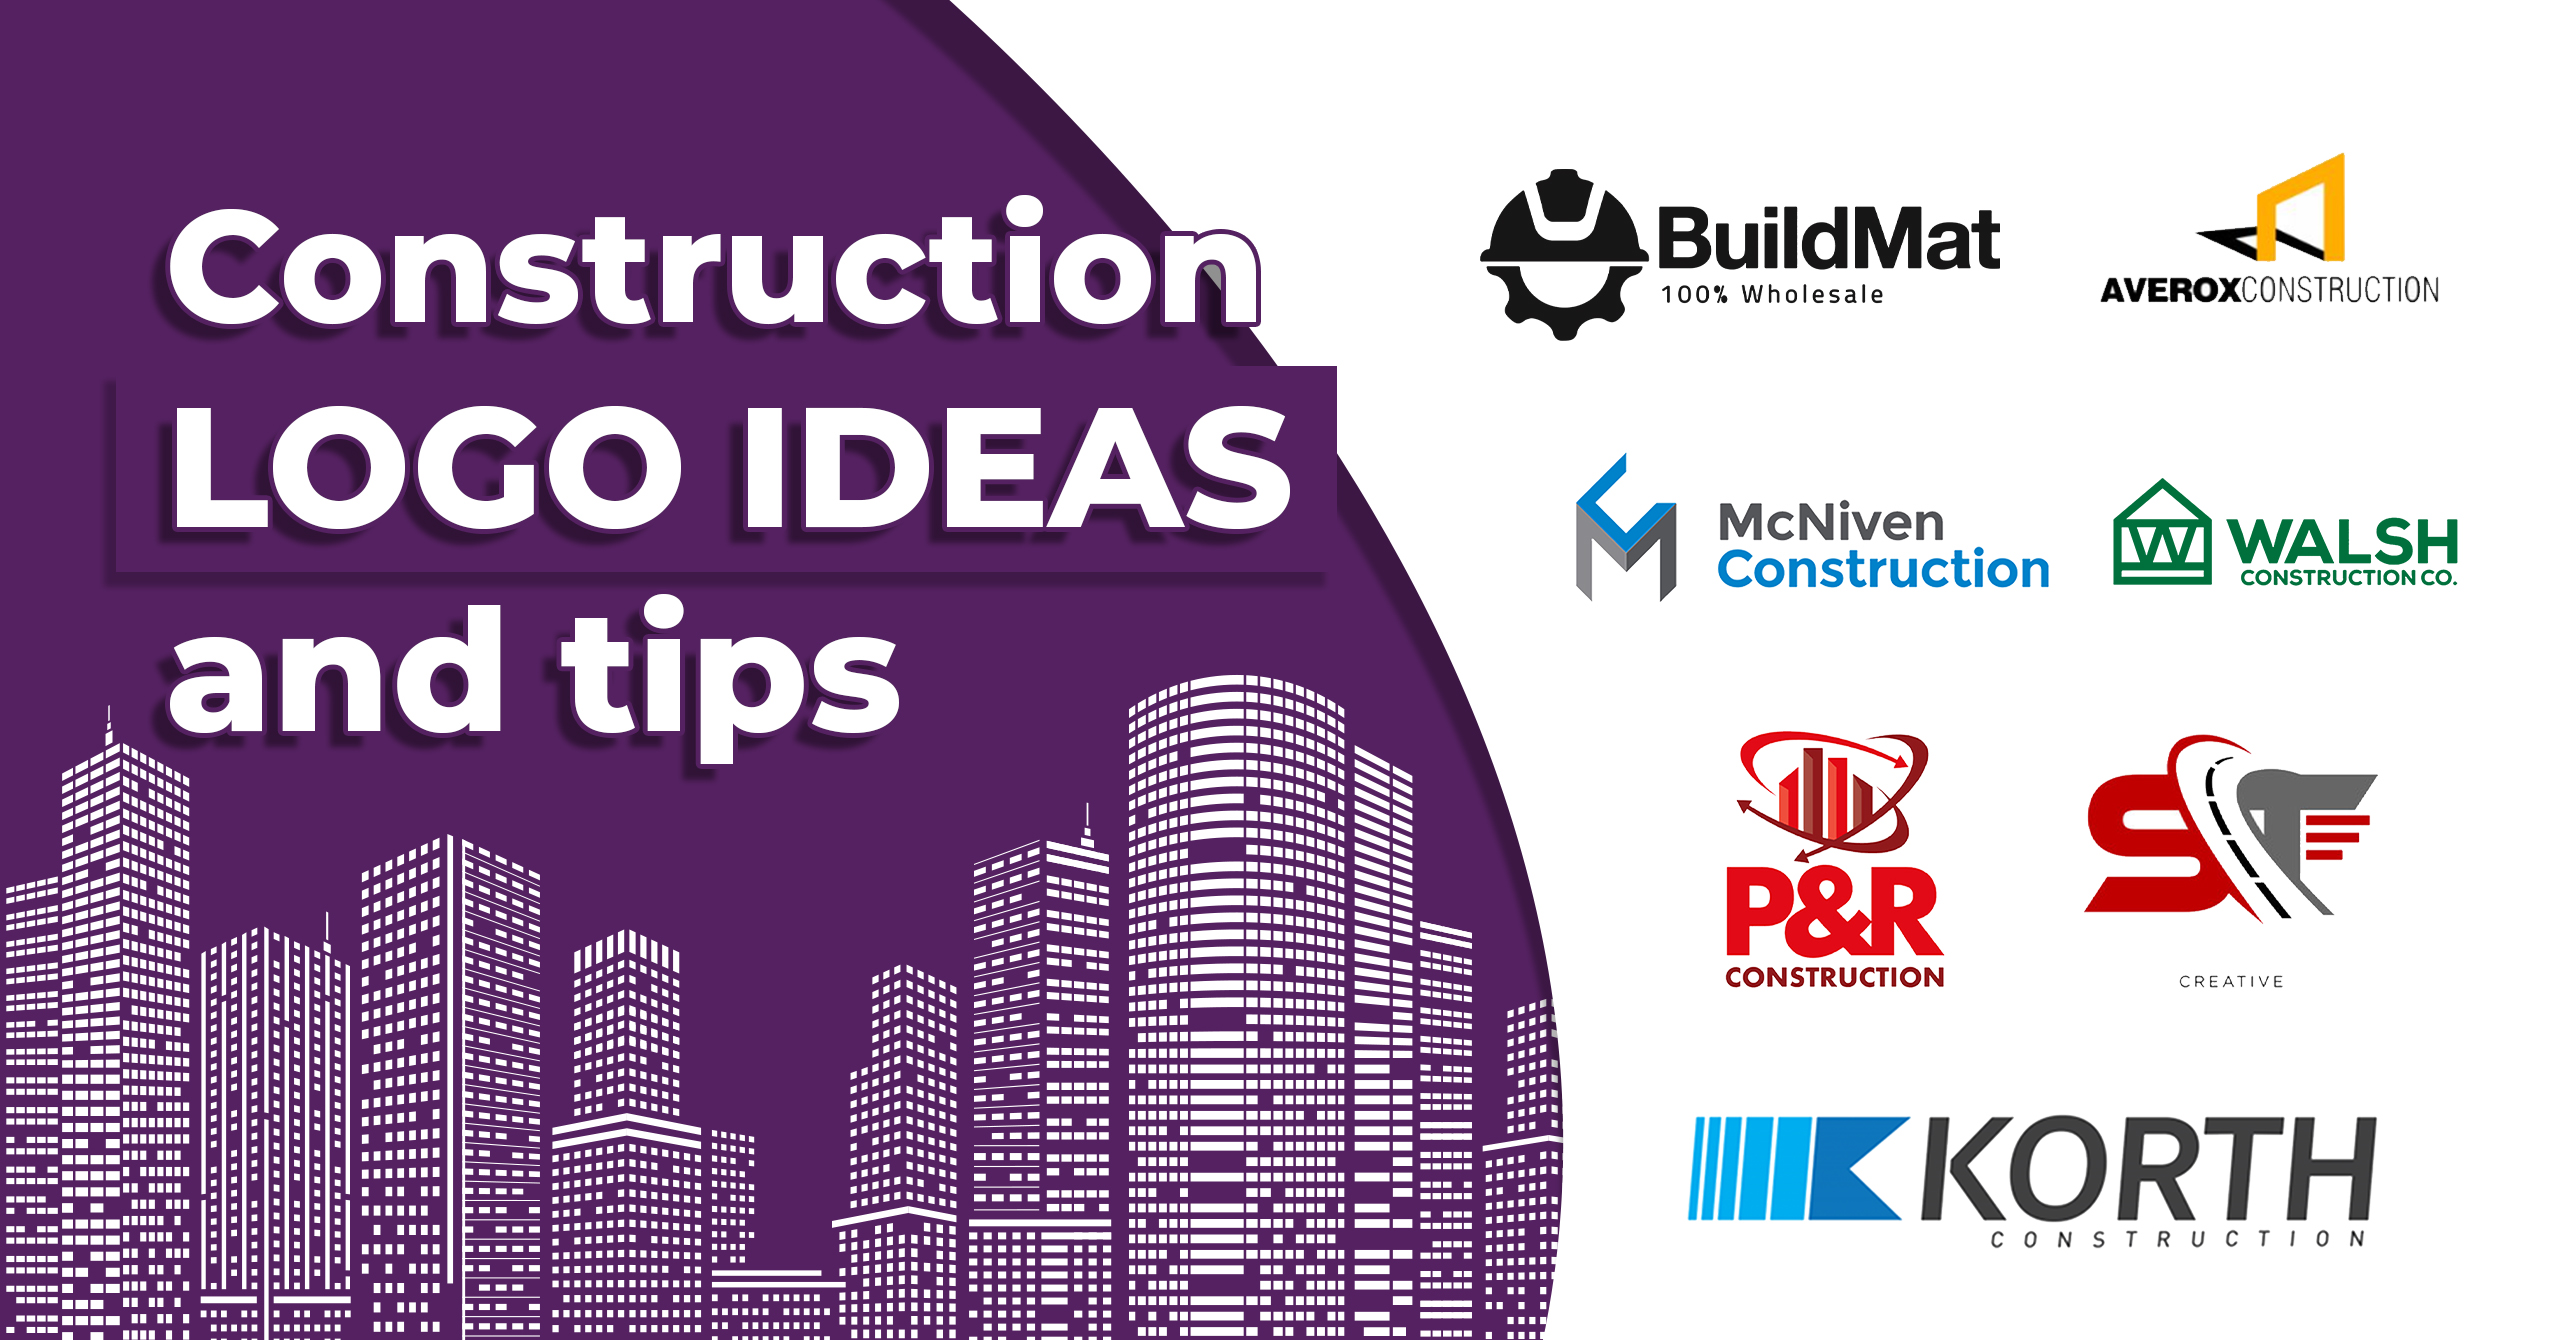 Construction logo ideas and tips